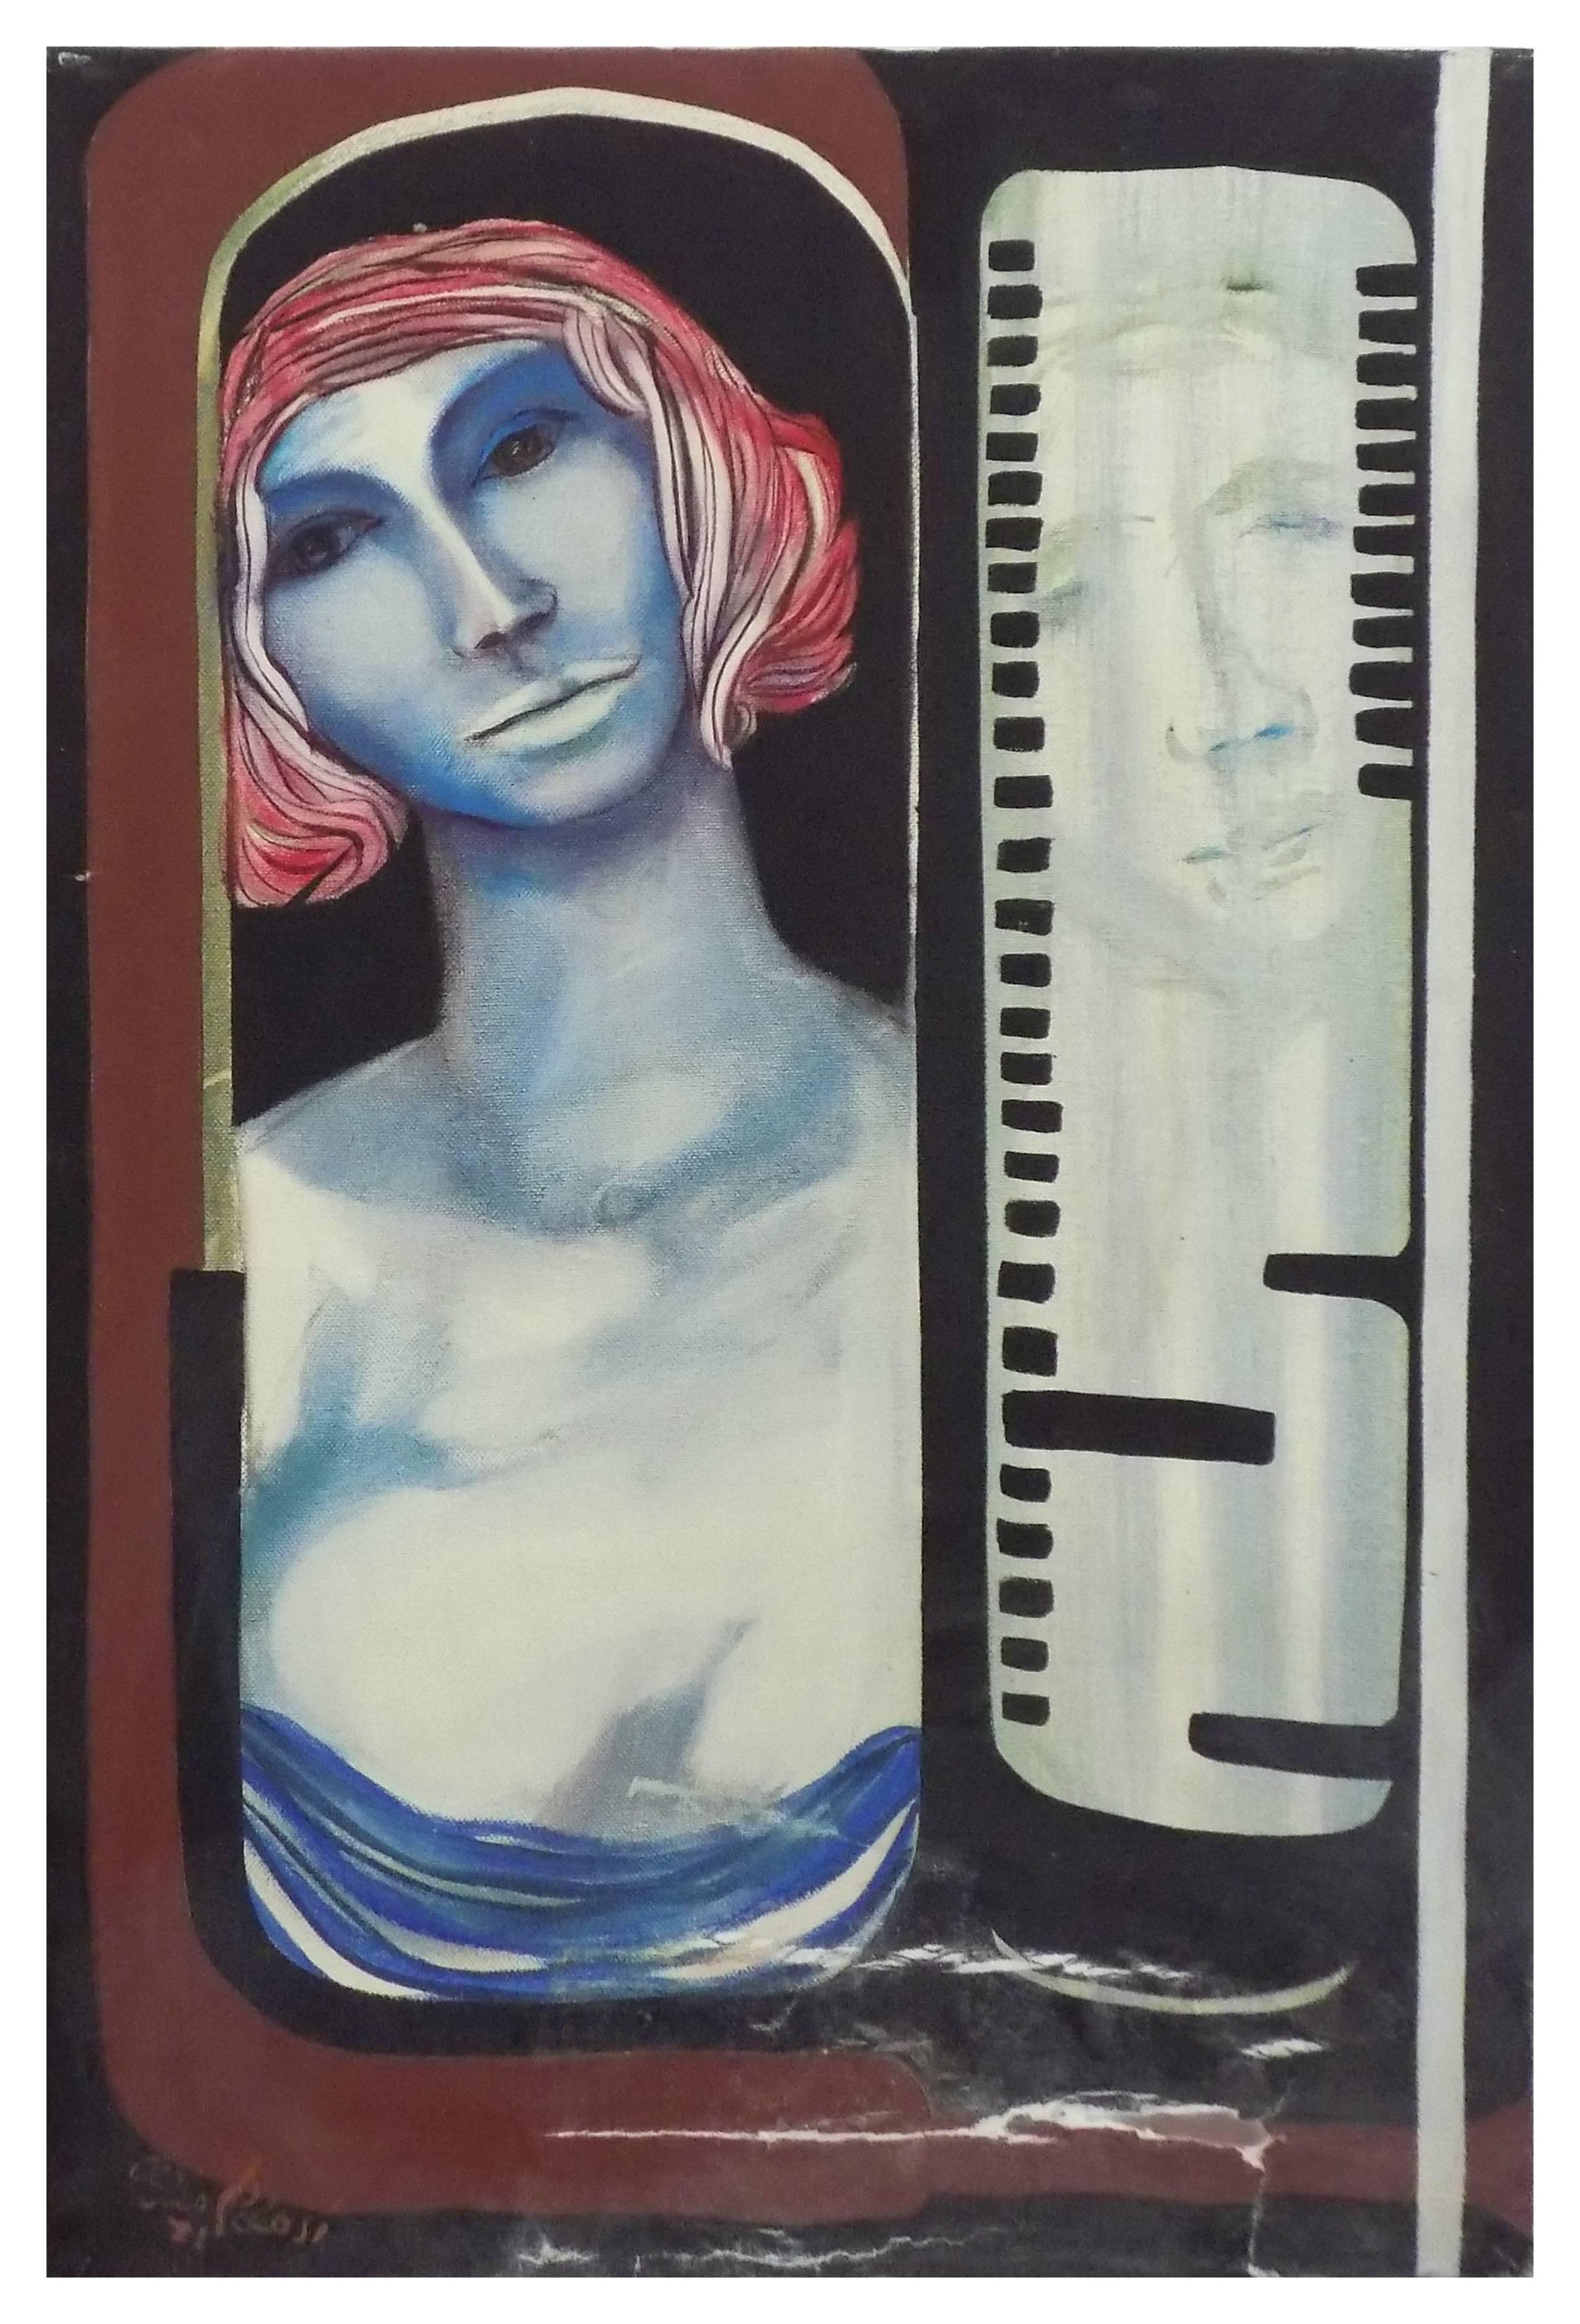 WOMAN TO THE MIRROR - Italian Figuratice Modern Oil on canvas by Elio Pelosi